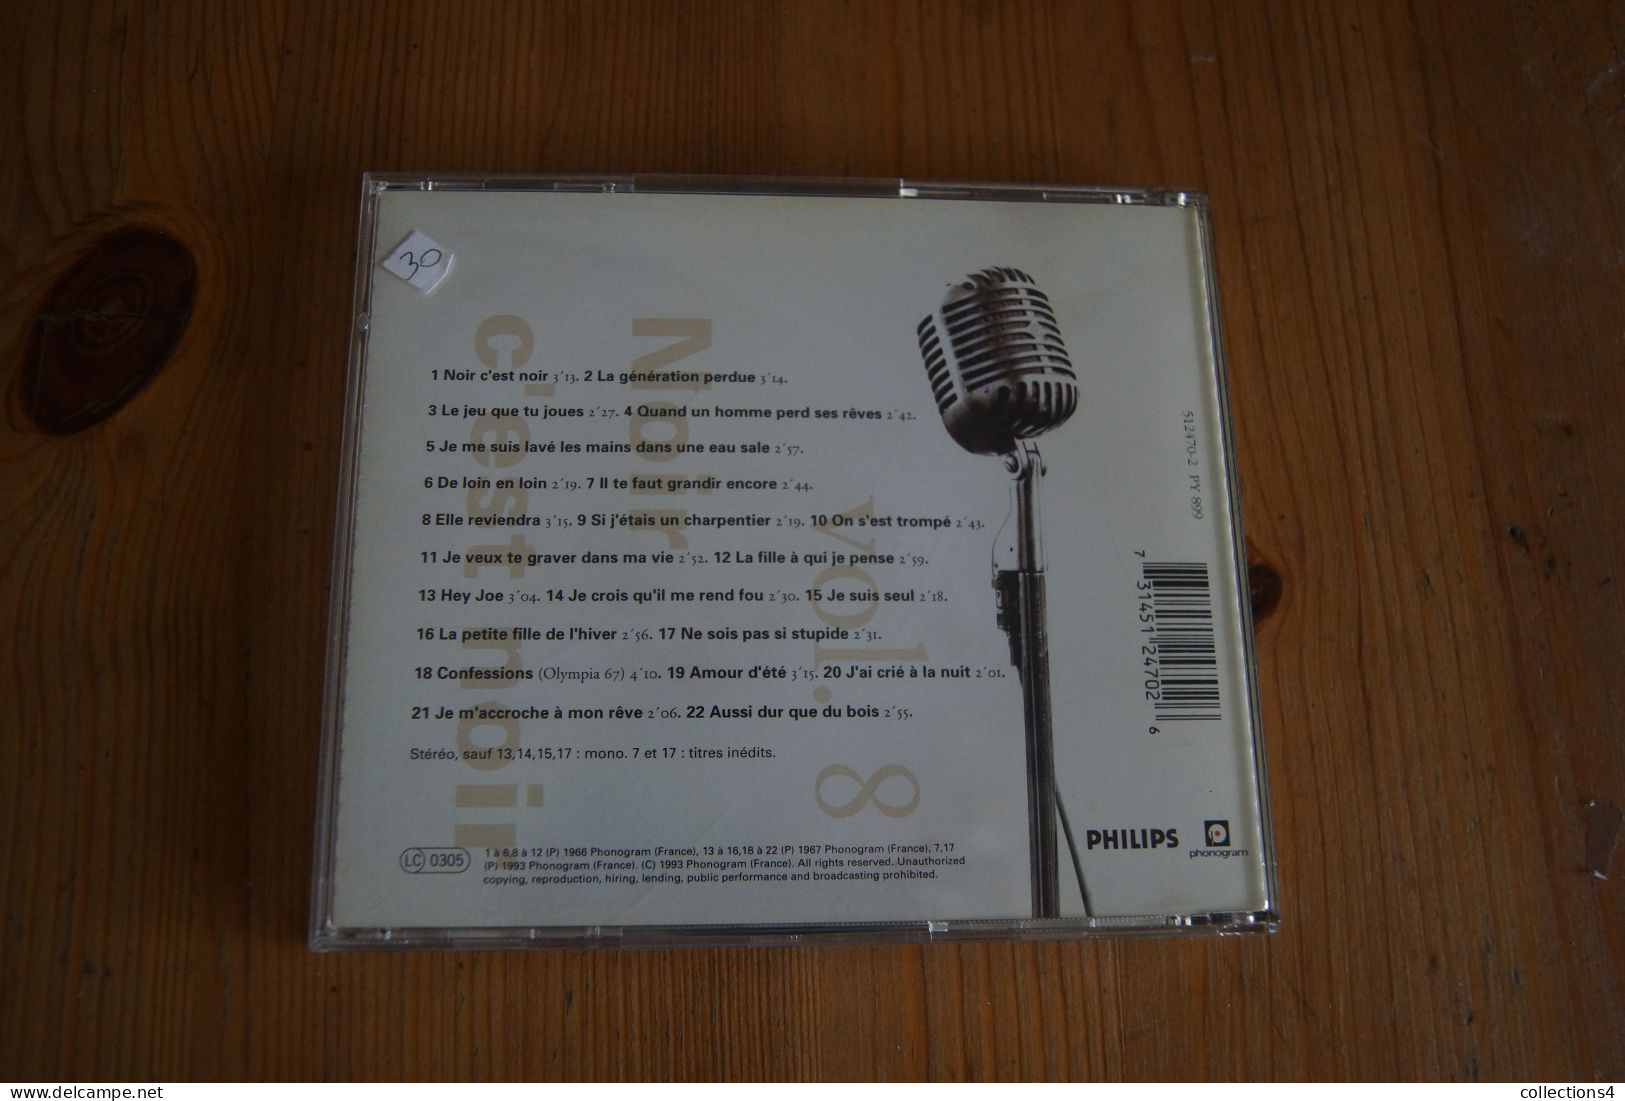 JOHNNY HALLYDAY NOIR C EST NOIR 1966-67  CD  SORTIE 1993 LIMITED EDITION - Rock